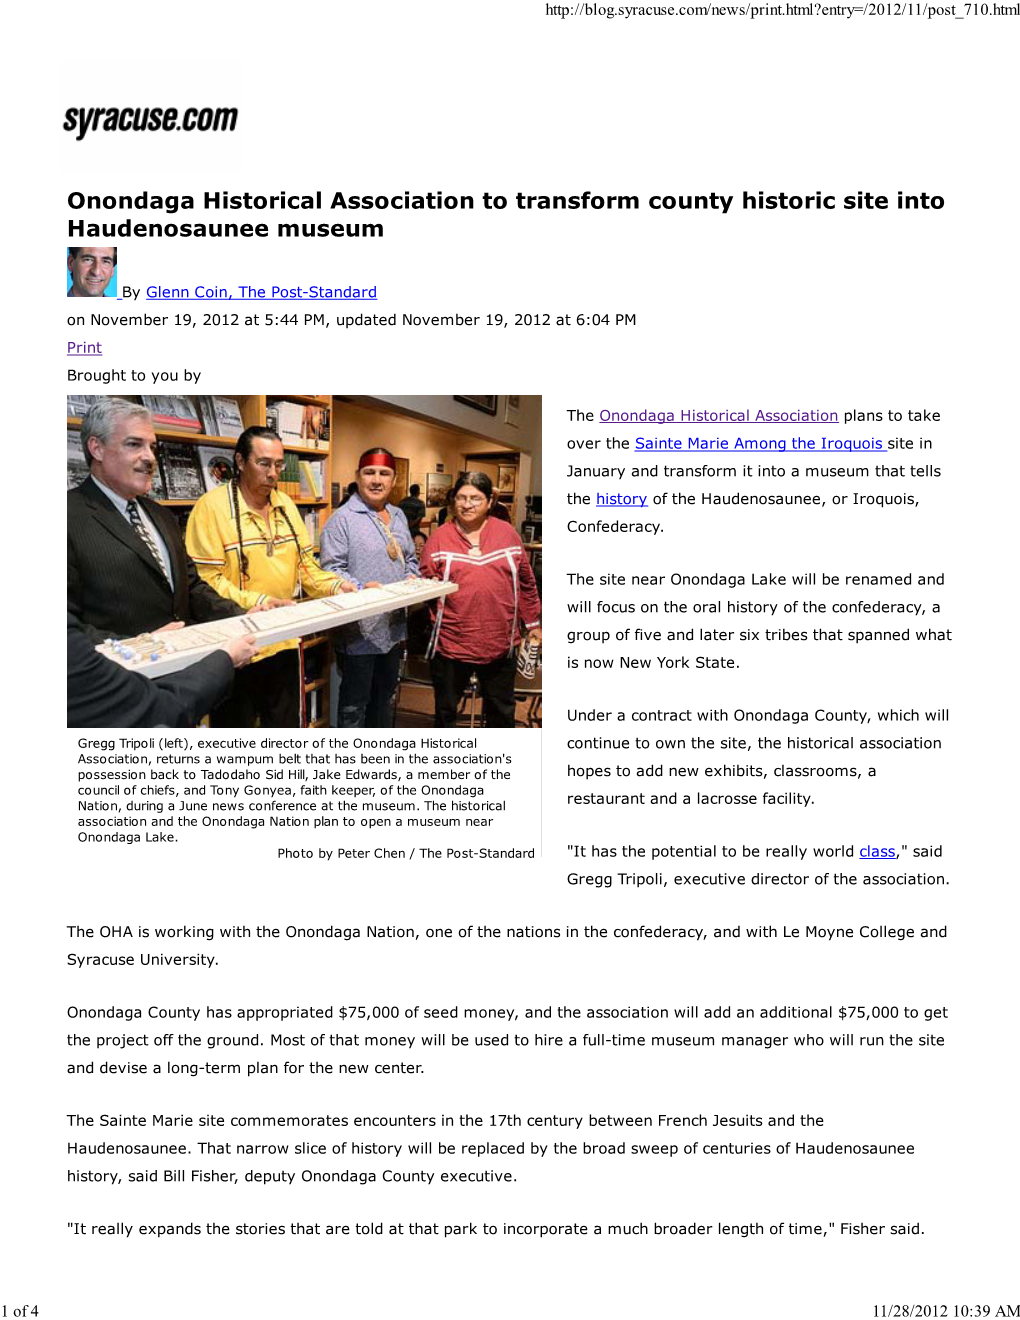 Onondaga Historical Association to Transform County Historic Site Into Haudenosaunee Museum